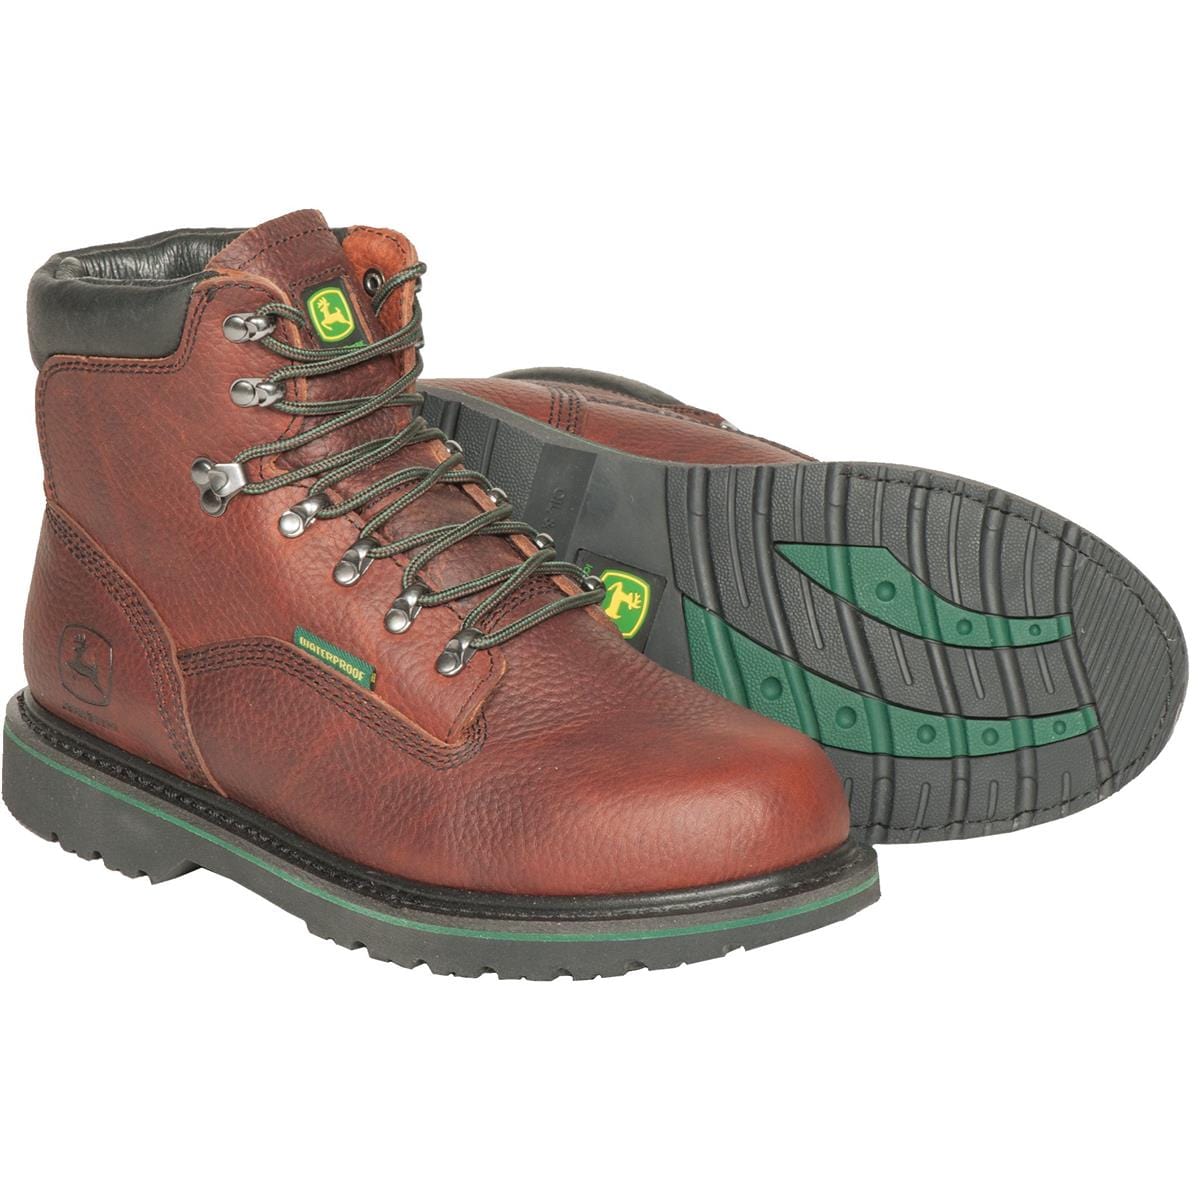 John Deere 6"H or 8"H Plain Toe Waterproof Boots